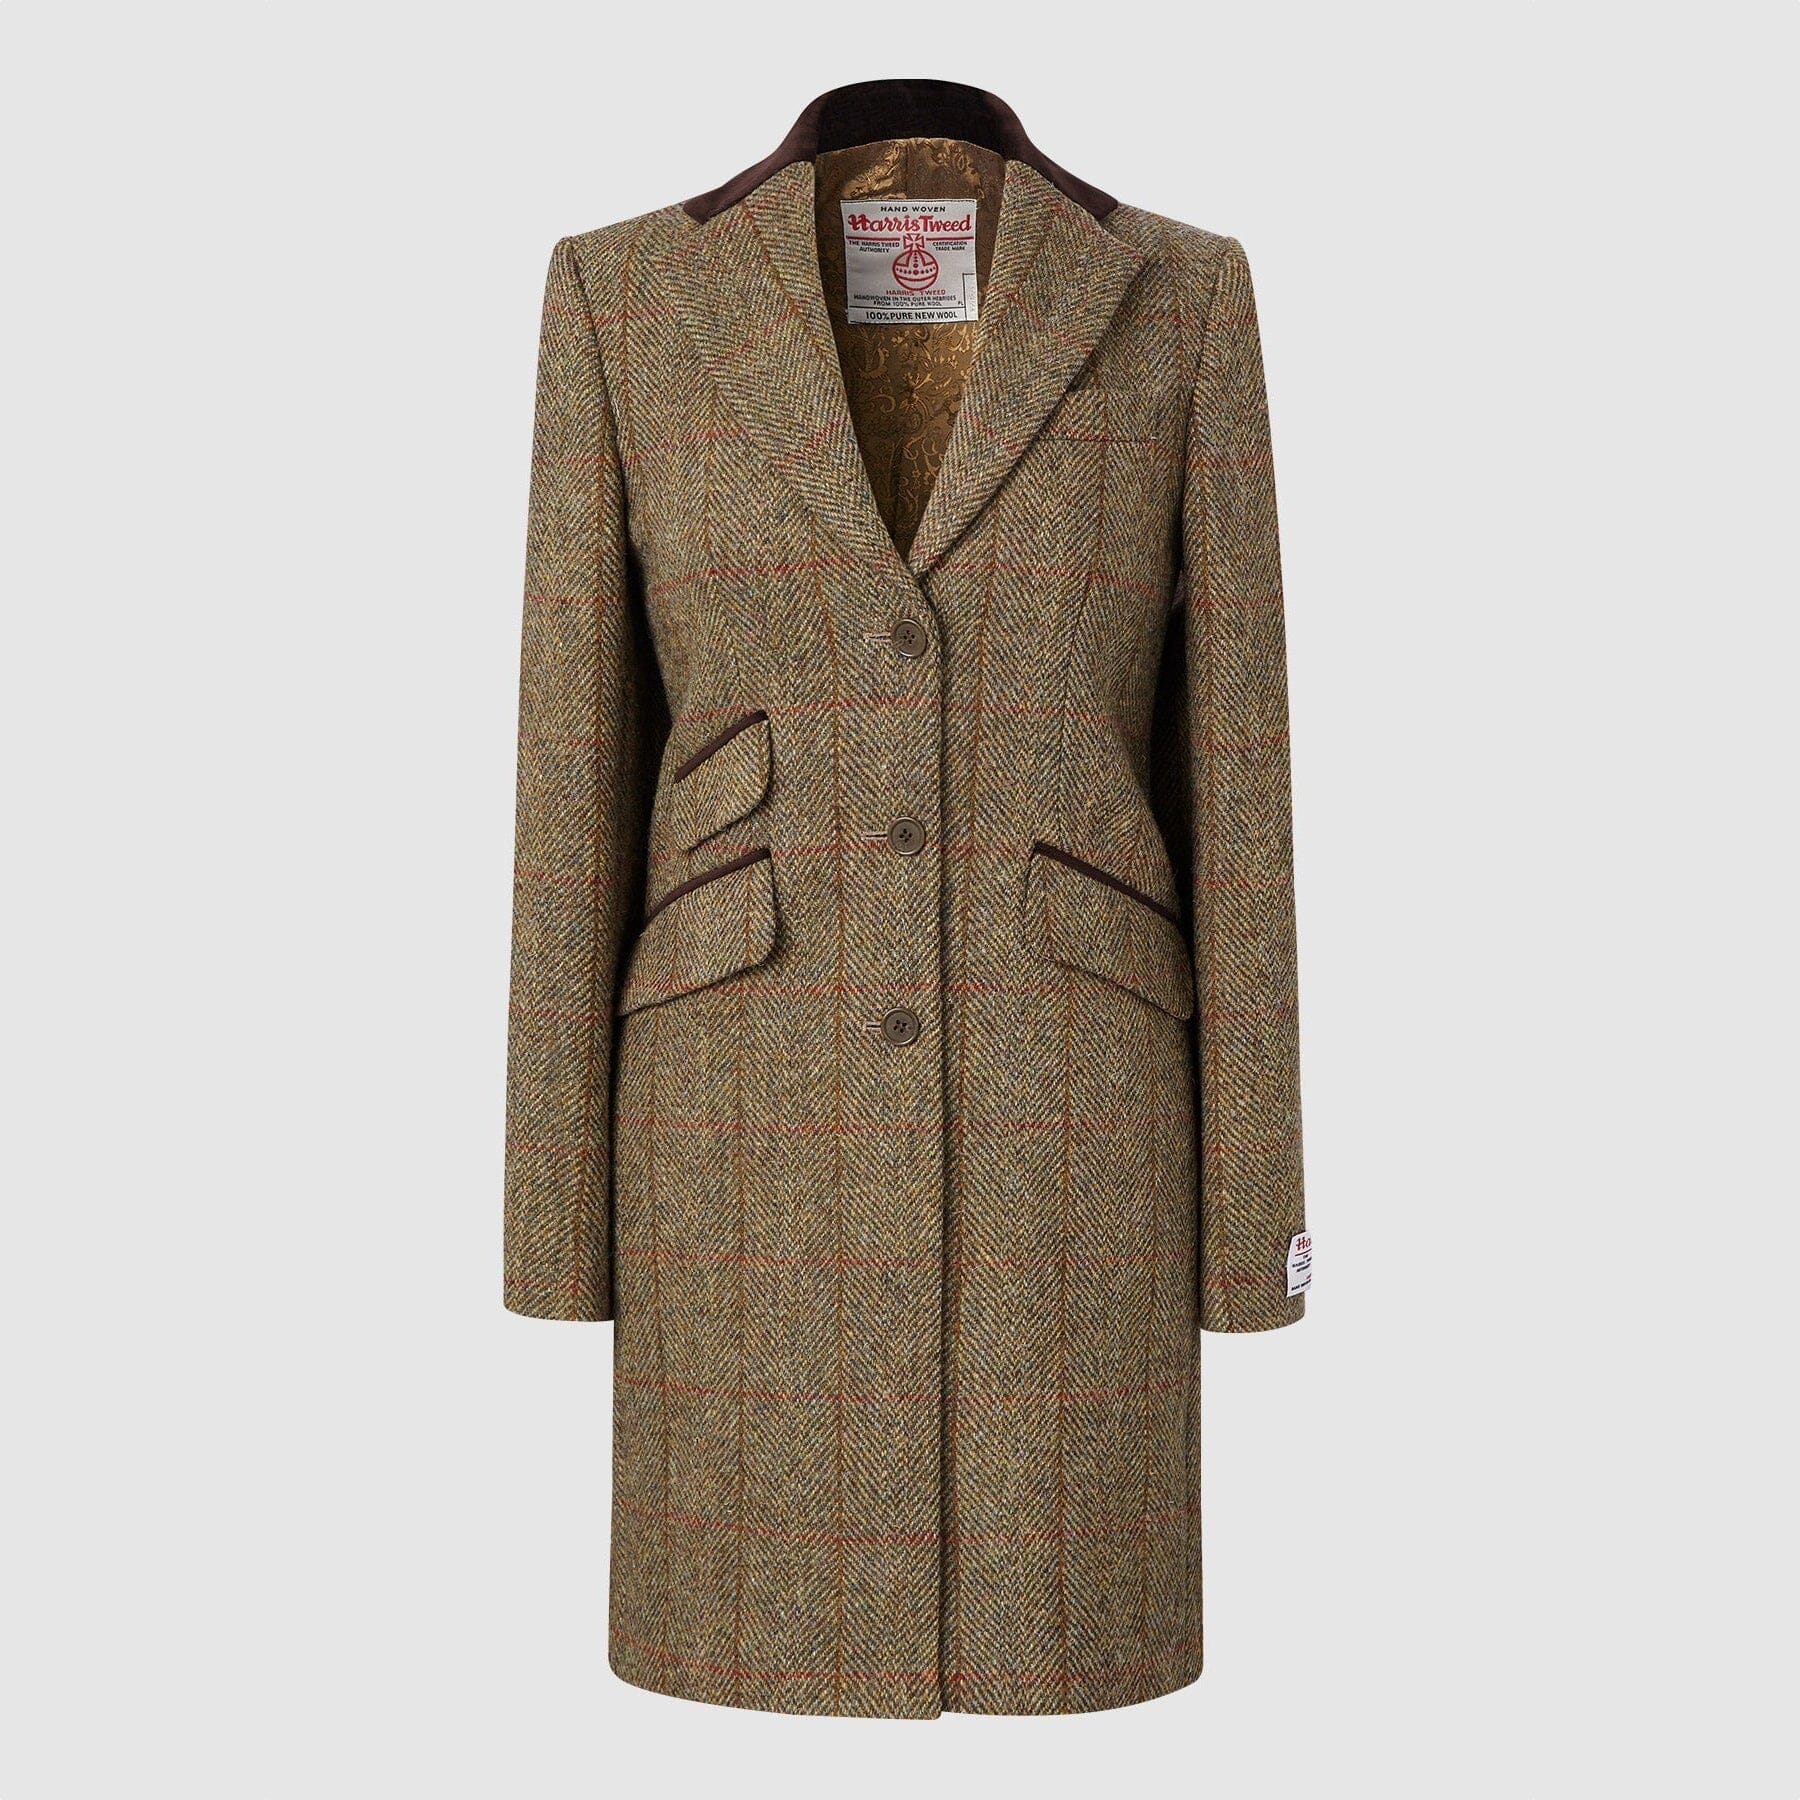 Se Tori 3/4 Ladies Coat frakke af Harris Tweed, mustard - 14 (L) hos Godsejeren